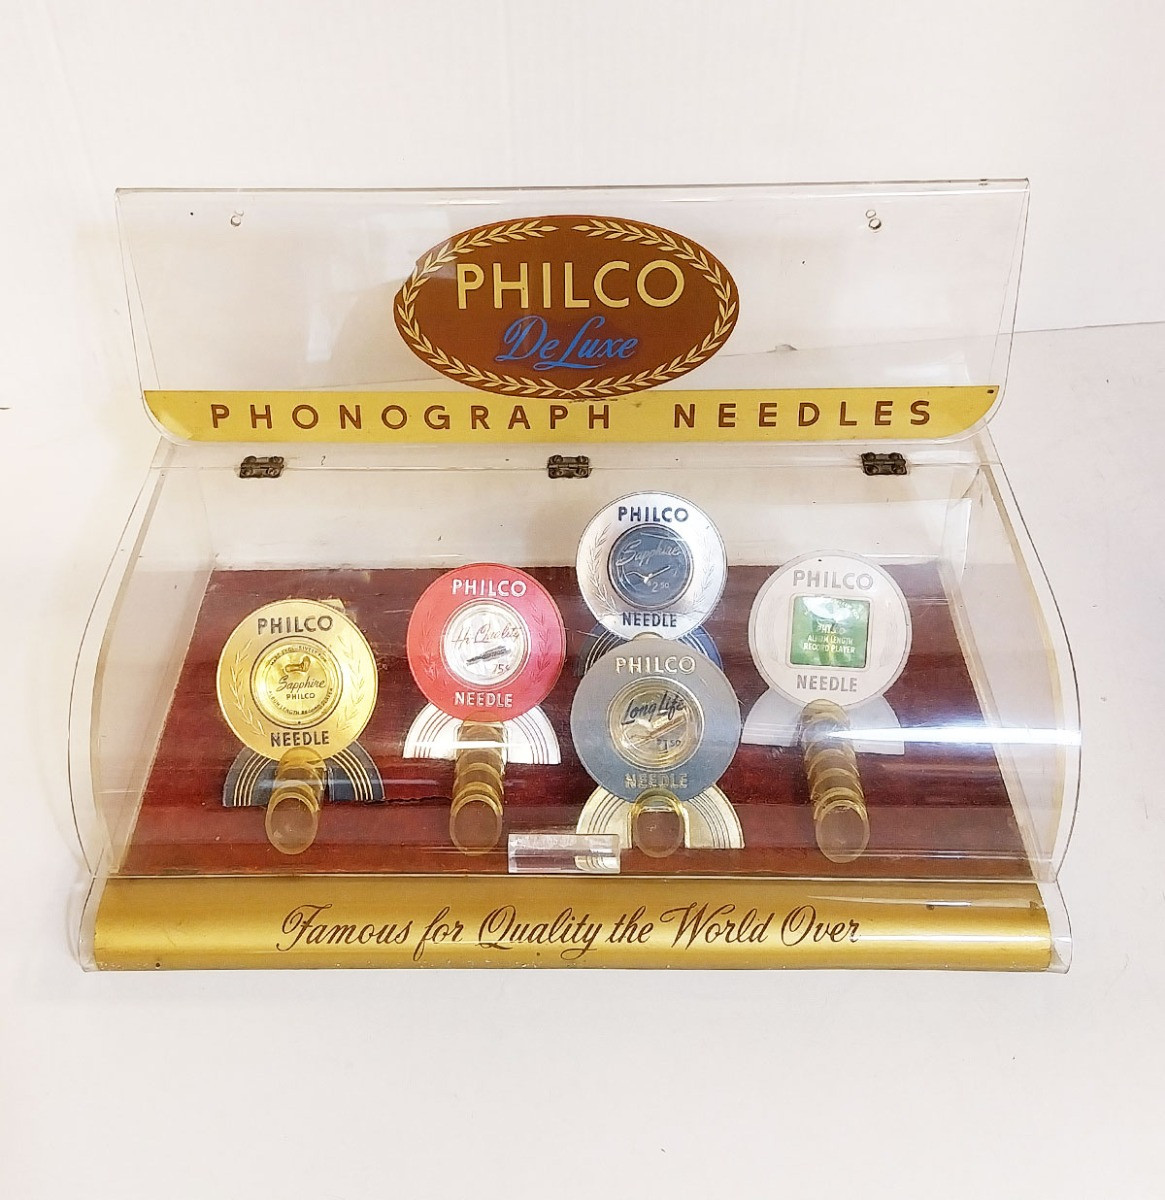 Philco Phonograph Needle Display